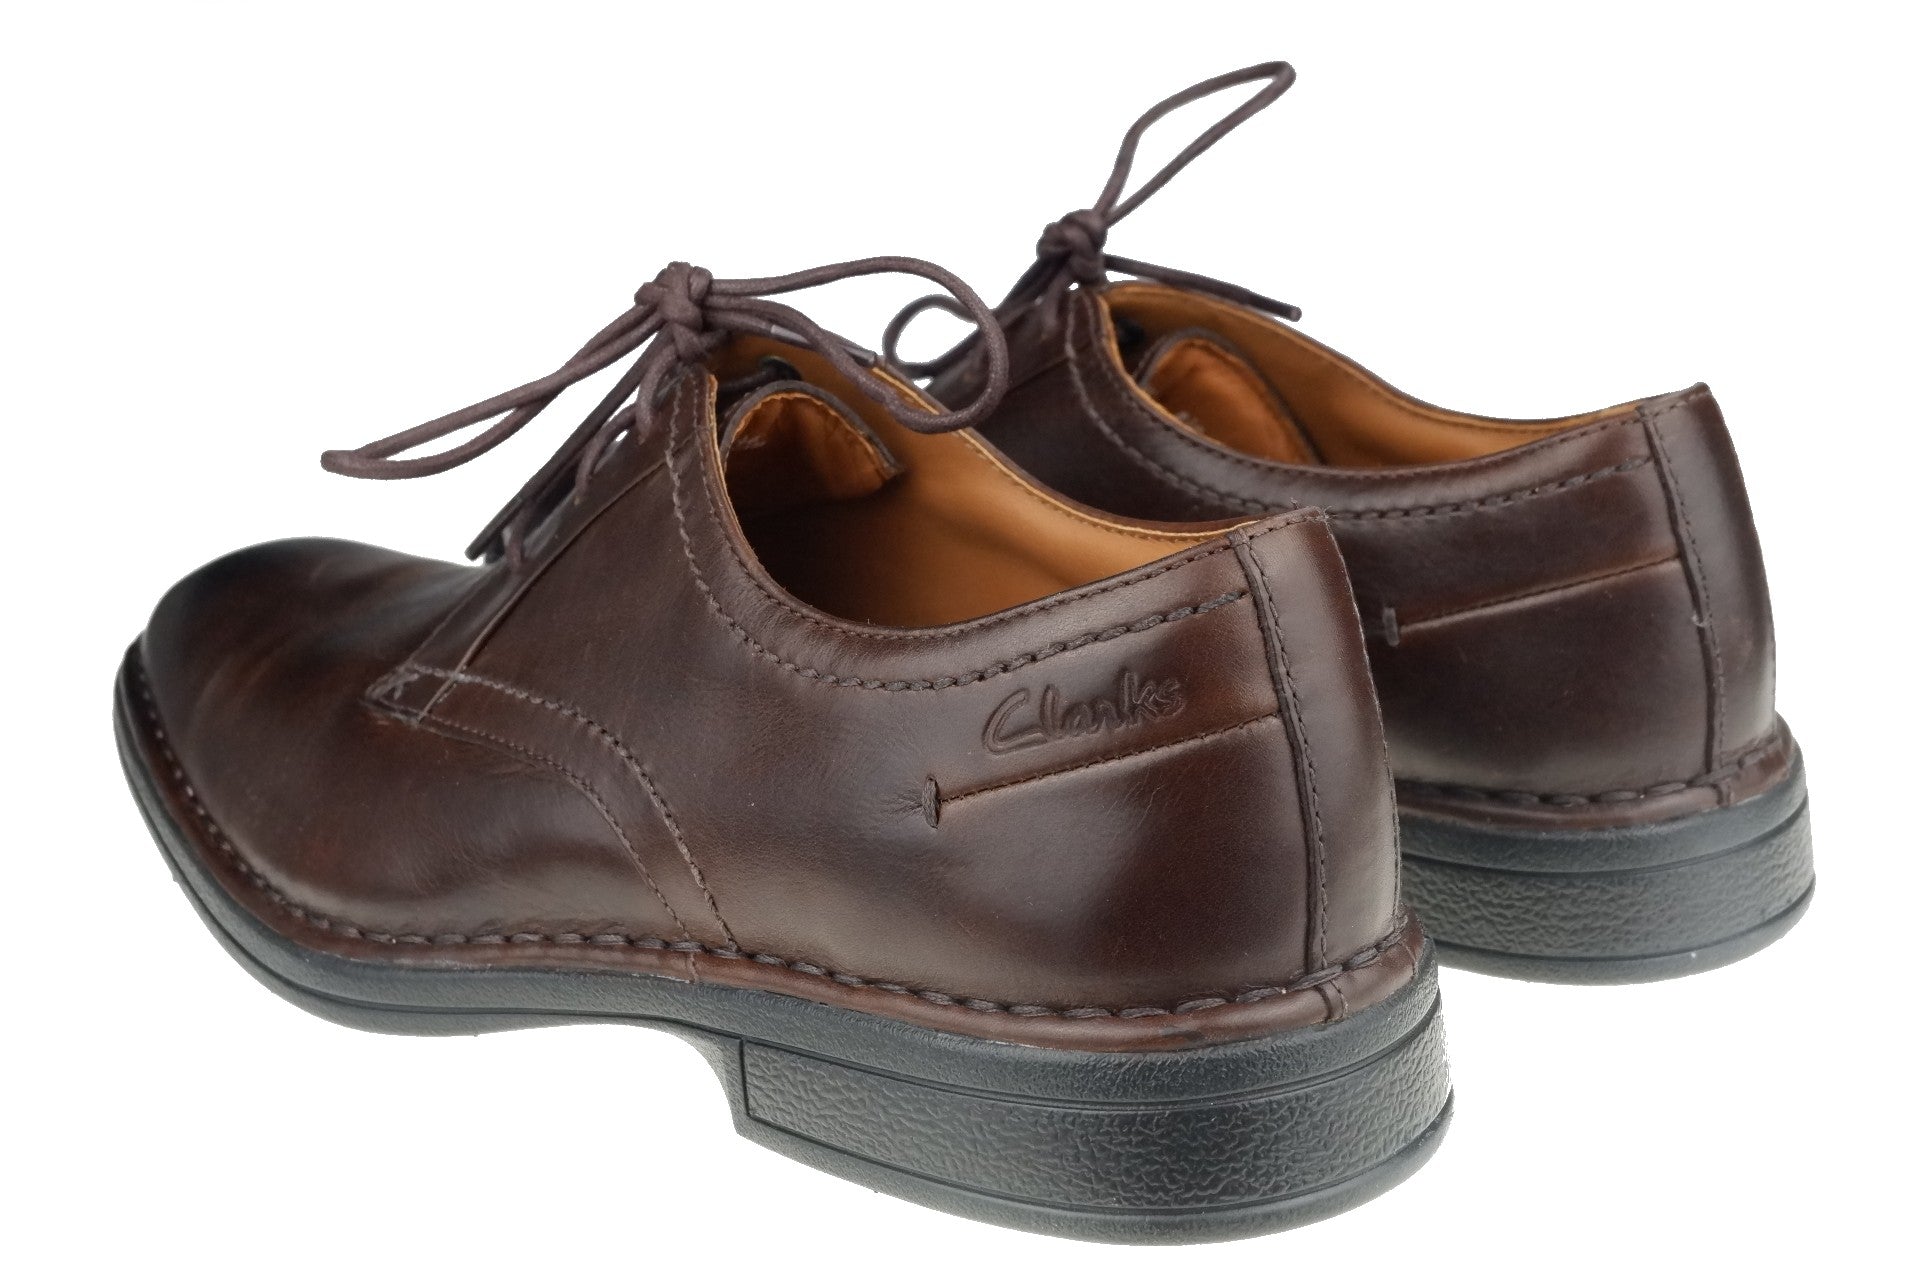 'Daily Walk' men's lace-up shoe - Chaplinshoes'Daily Walk' men's lace-up shoeClarks